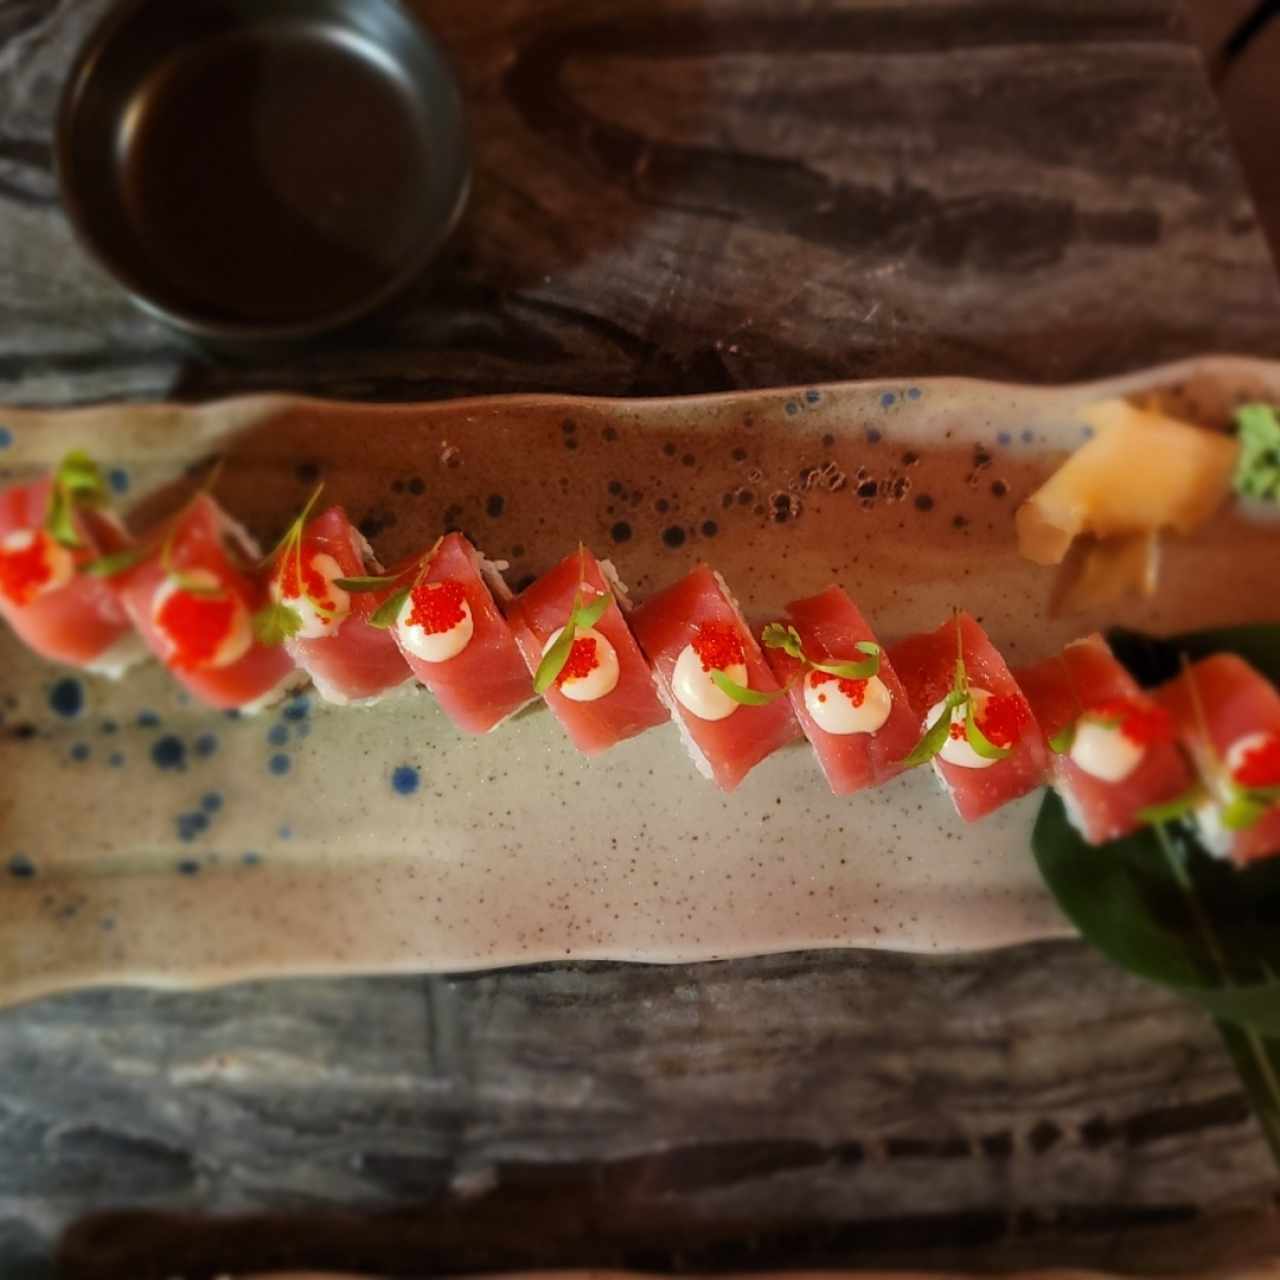 Sushi Bar - Fantasy Roll